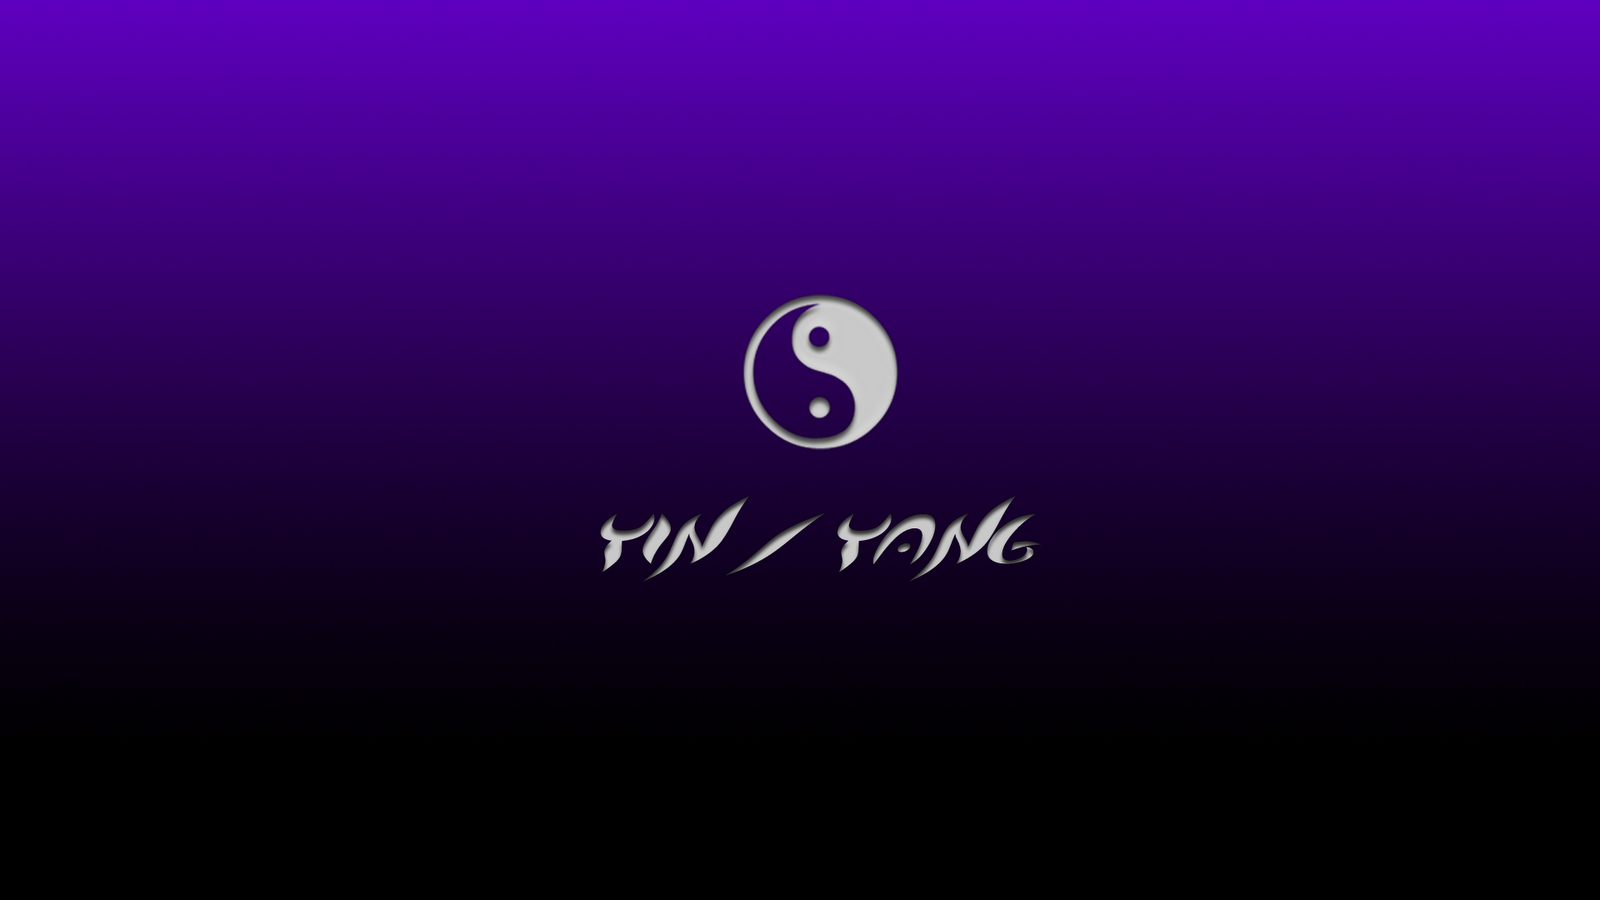 Yin Yang Full HD Wallpapers Part 2